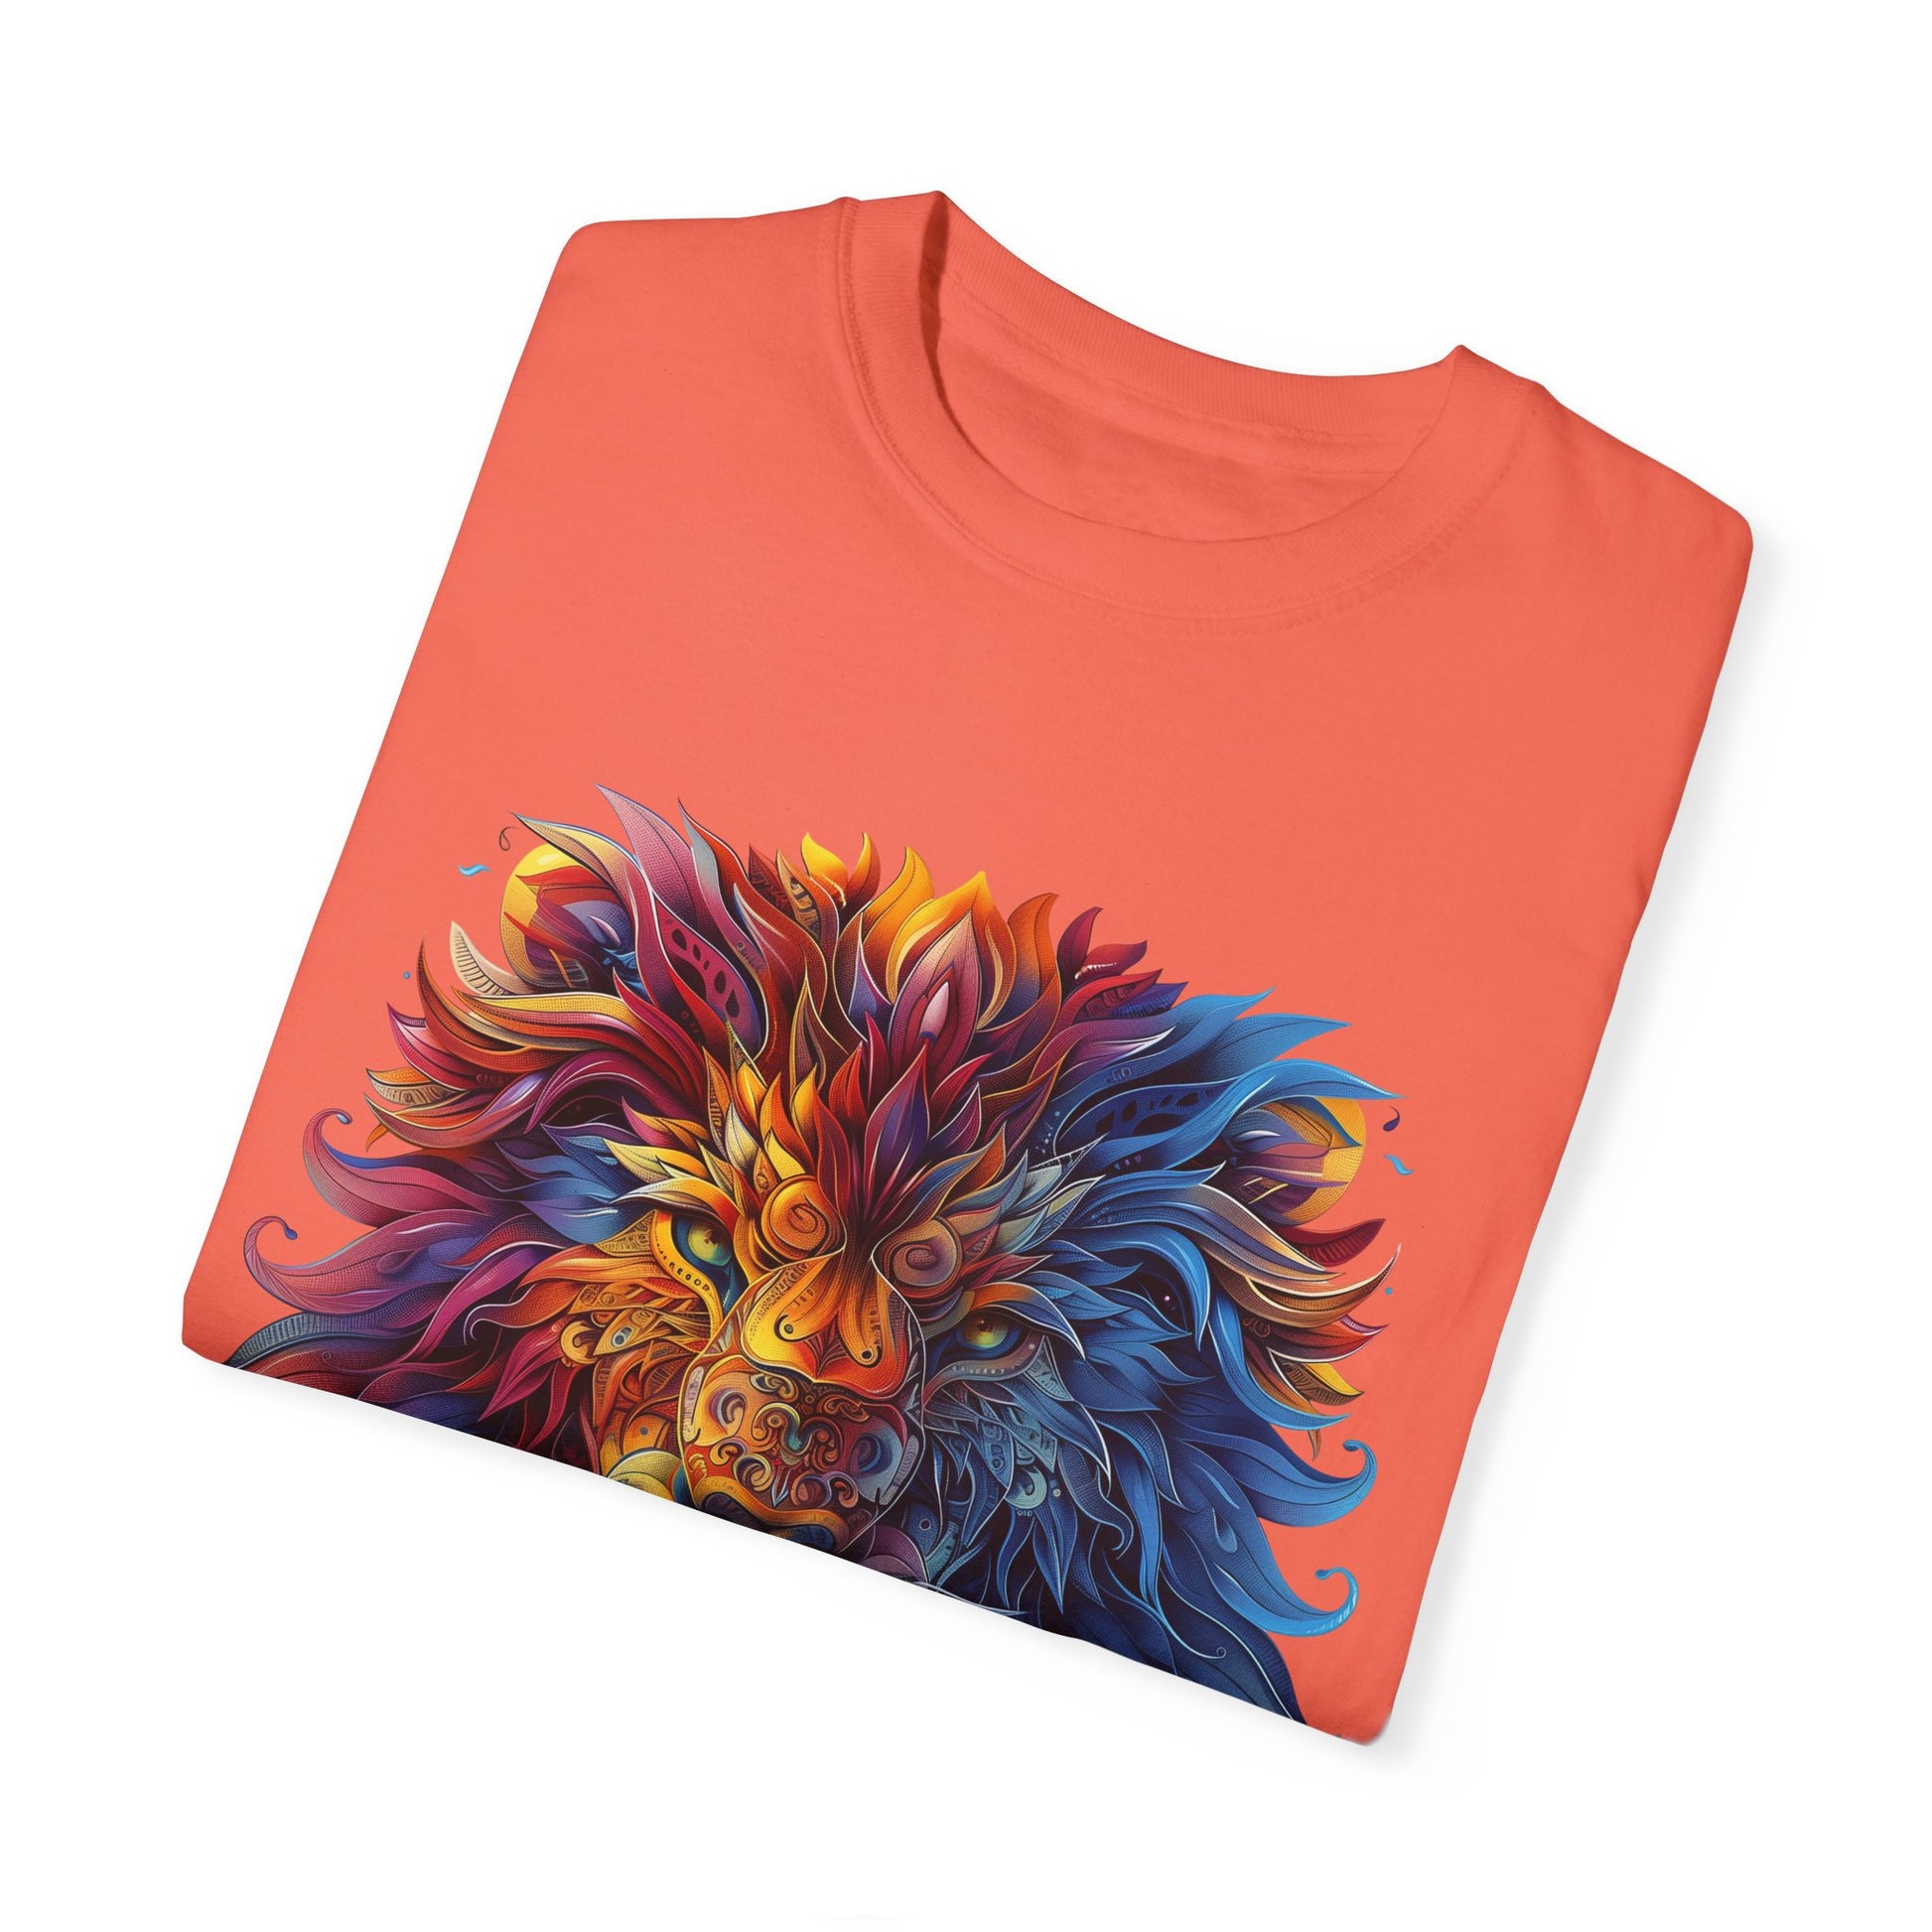 Lion Head Cool Graphic Design Novelty Unisex Garment-dyed T-shirt Cotton Funny Humorous Graphic Soft Premium Unisex Men Women Bright Salmon T-shirt Birthday Gift-32